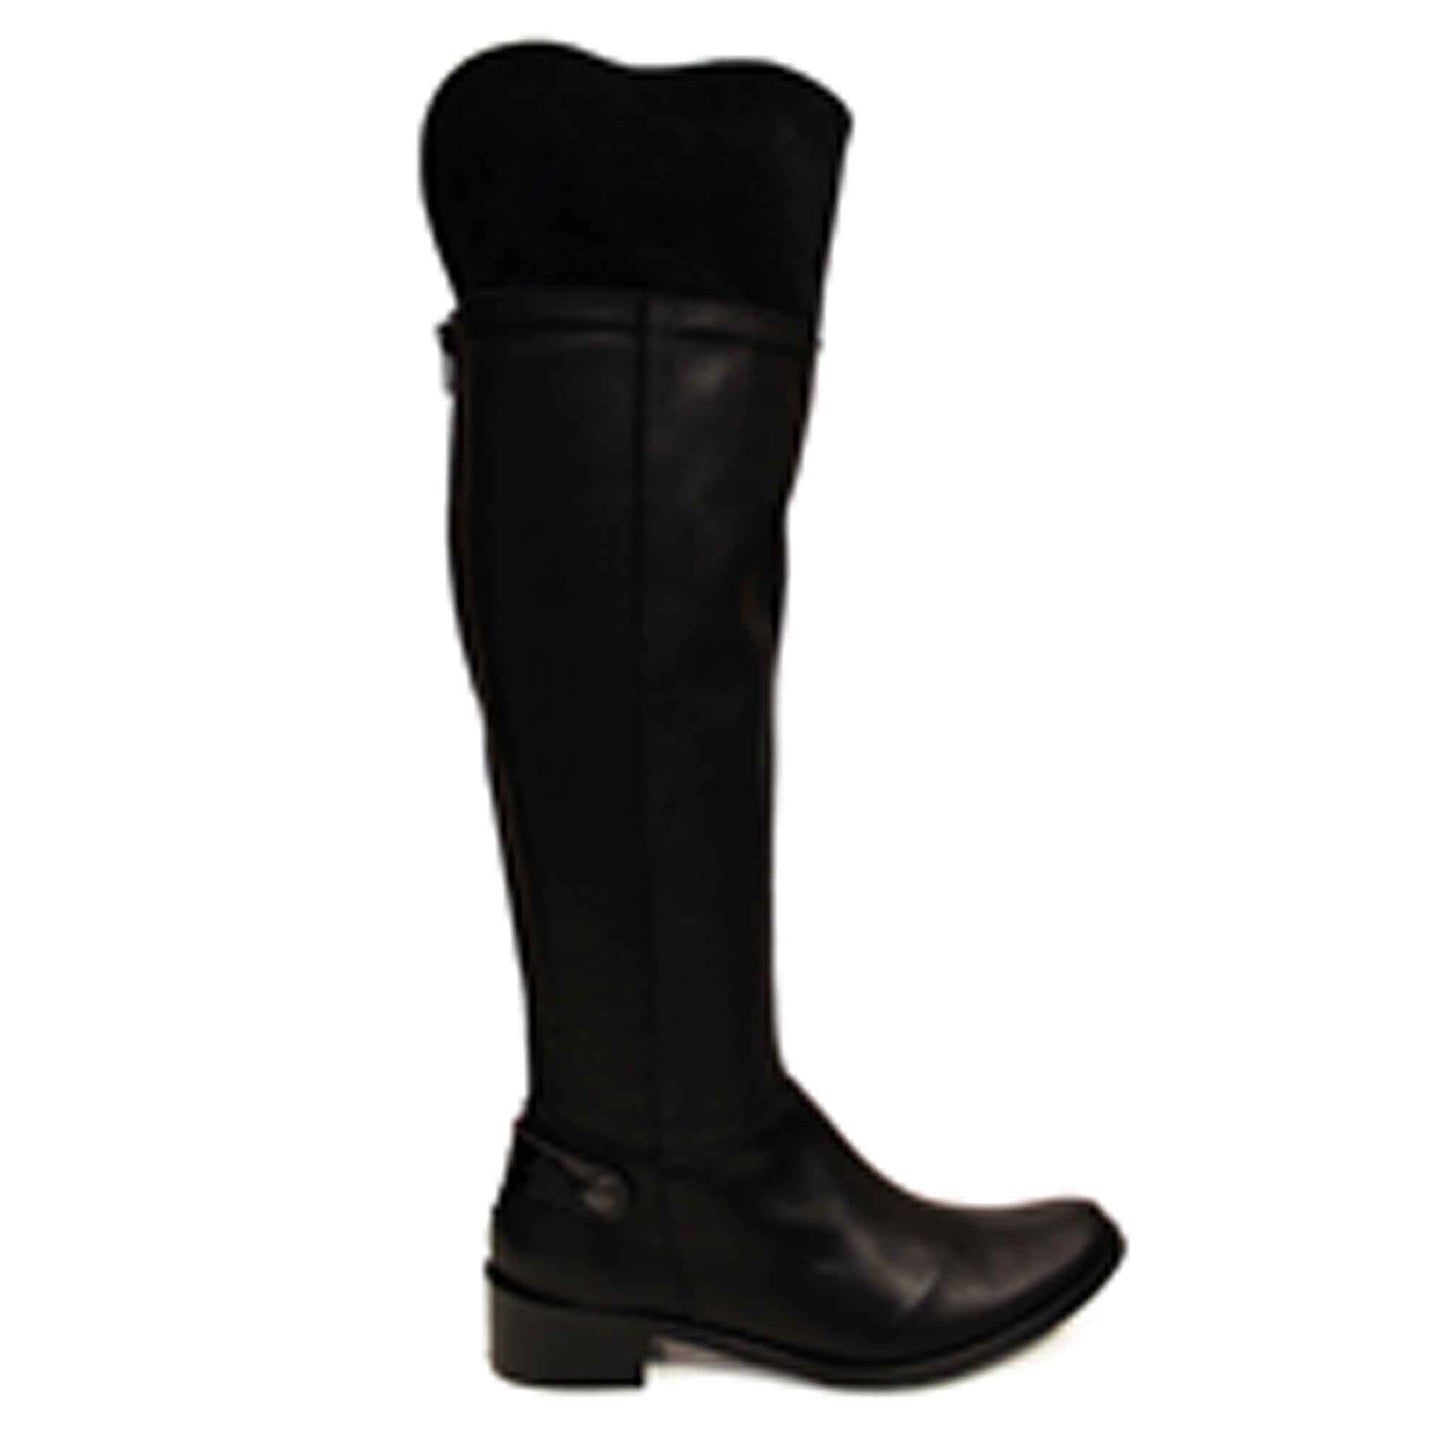 St Germaine - Black Leather long leg boot